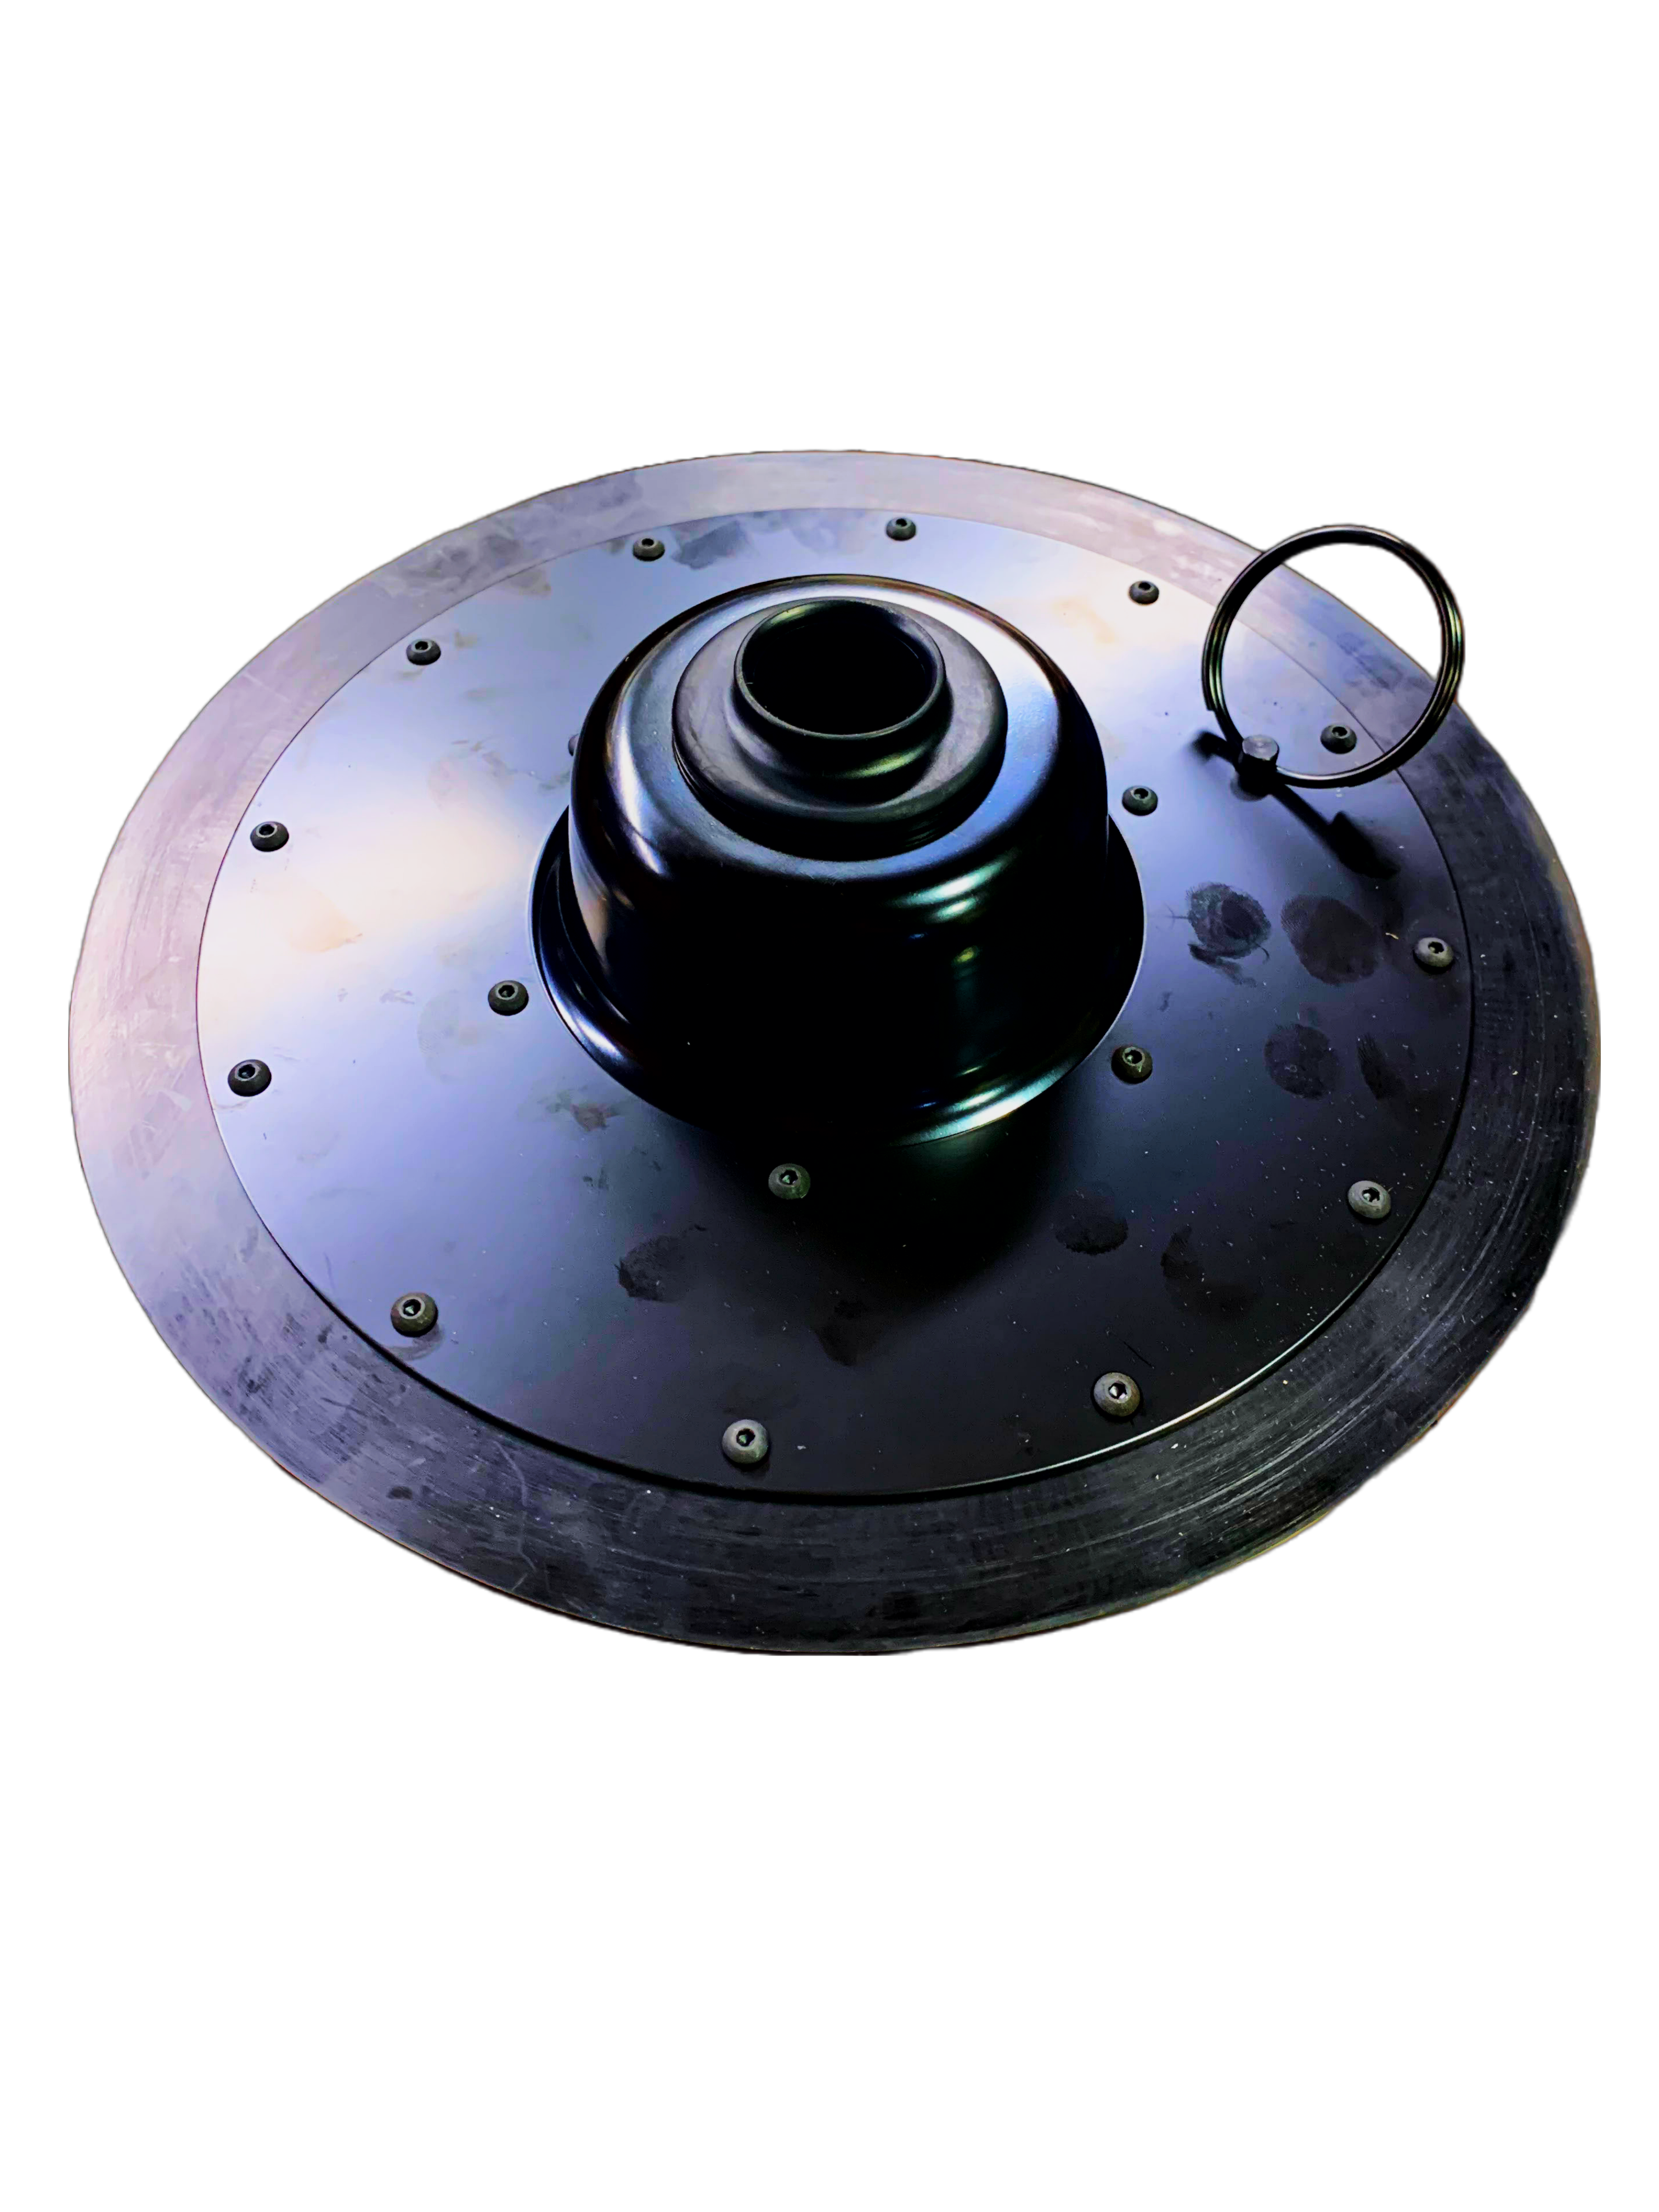 Graco 35 lb Follow Plate for 35 lb LD Series/Fireball Pumps (24F901) - Contractor's Maintenance Service